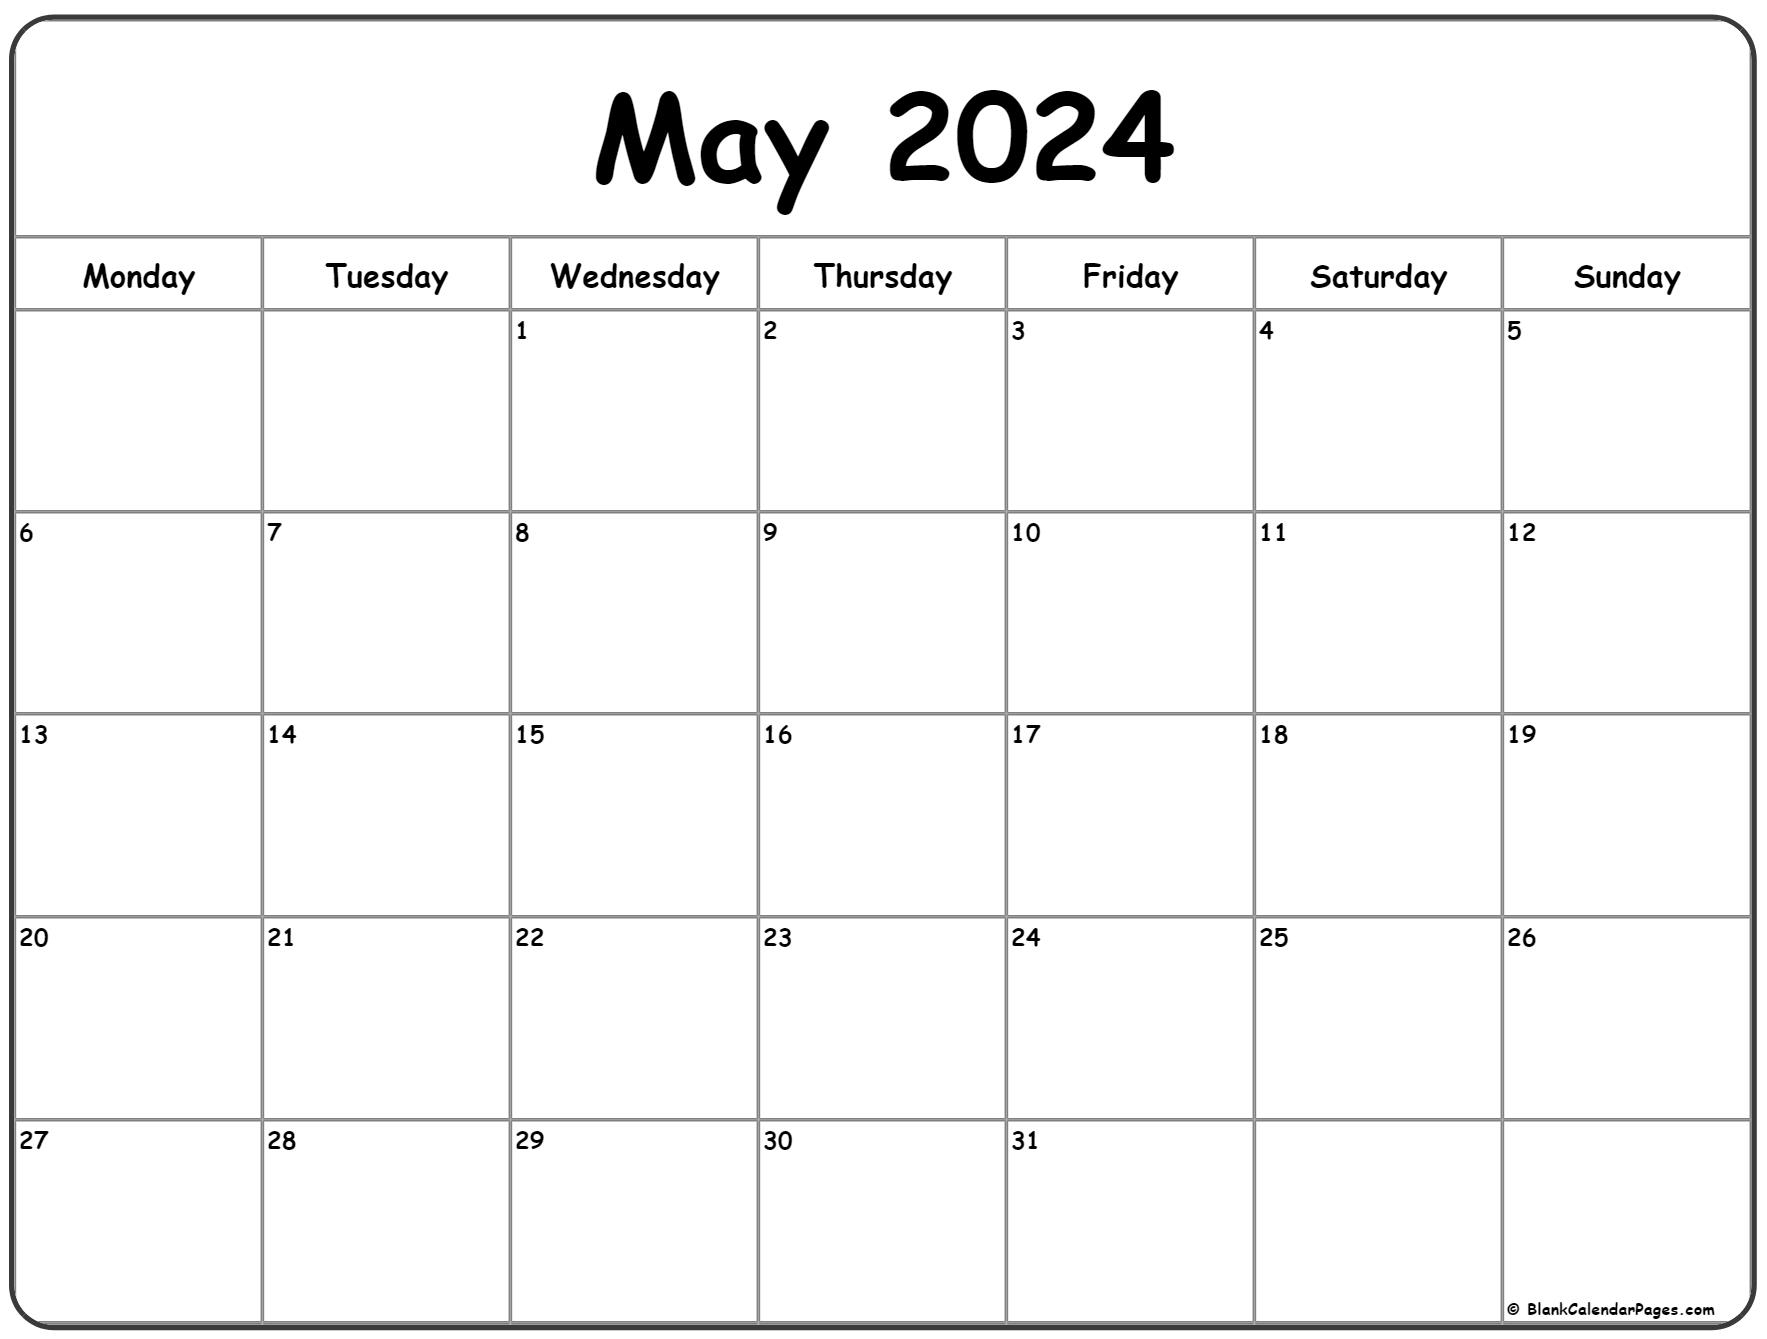 May 2024 Monday Calendar | Monday To Sunday for Printable Weekly Calendar May 2024